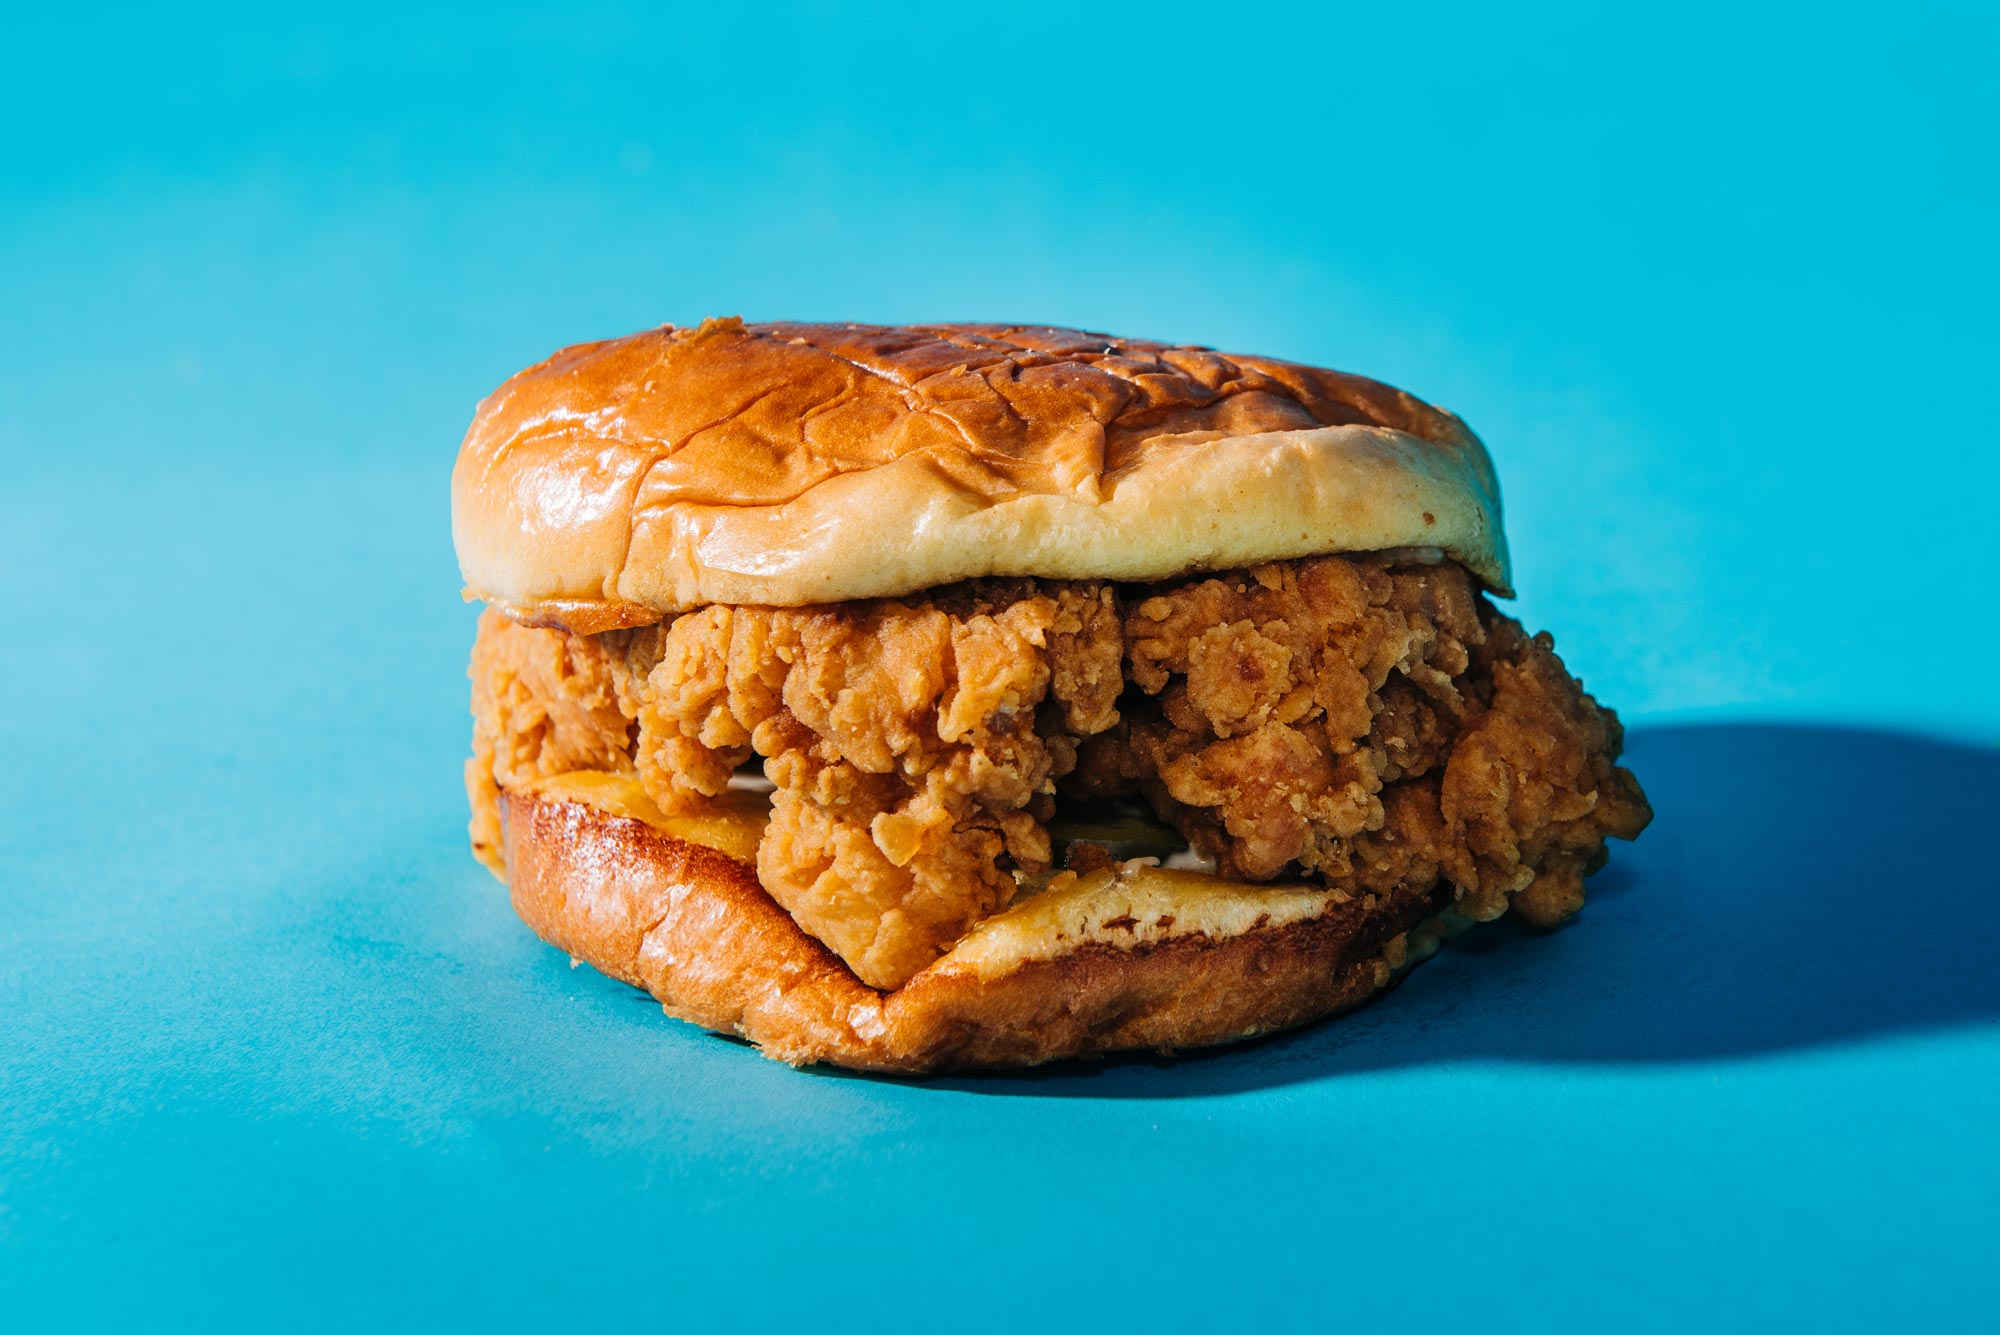 A photo of the Popeye's chicken sandwich